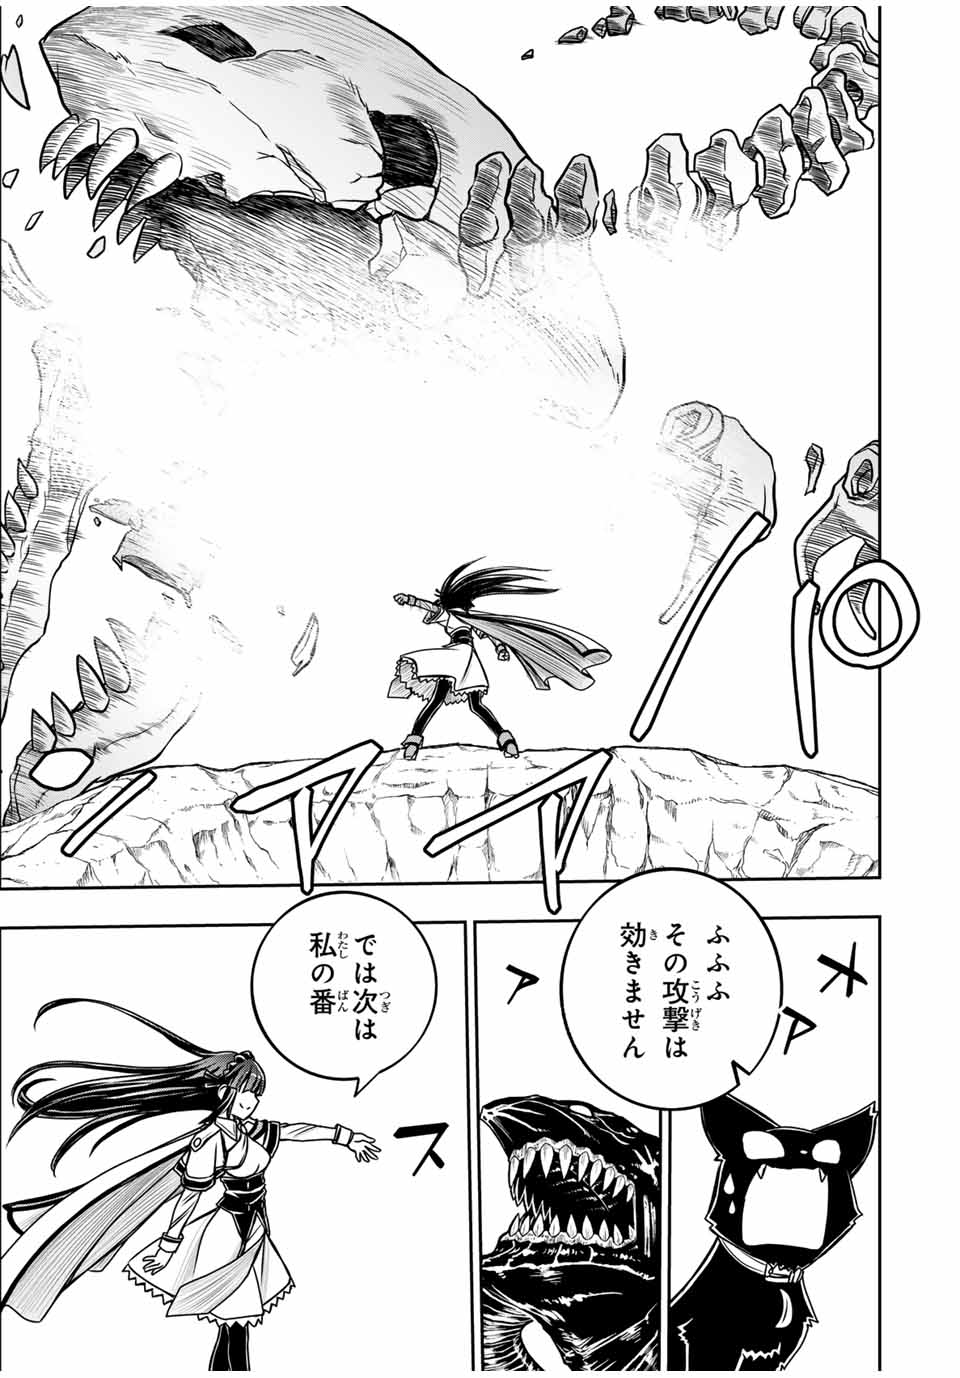 Nengan no Akuyaku Reijou (Last Boss) no Karada wo Teniiretazo!  - Chapter 22 - Page 7